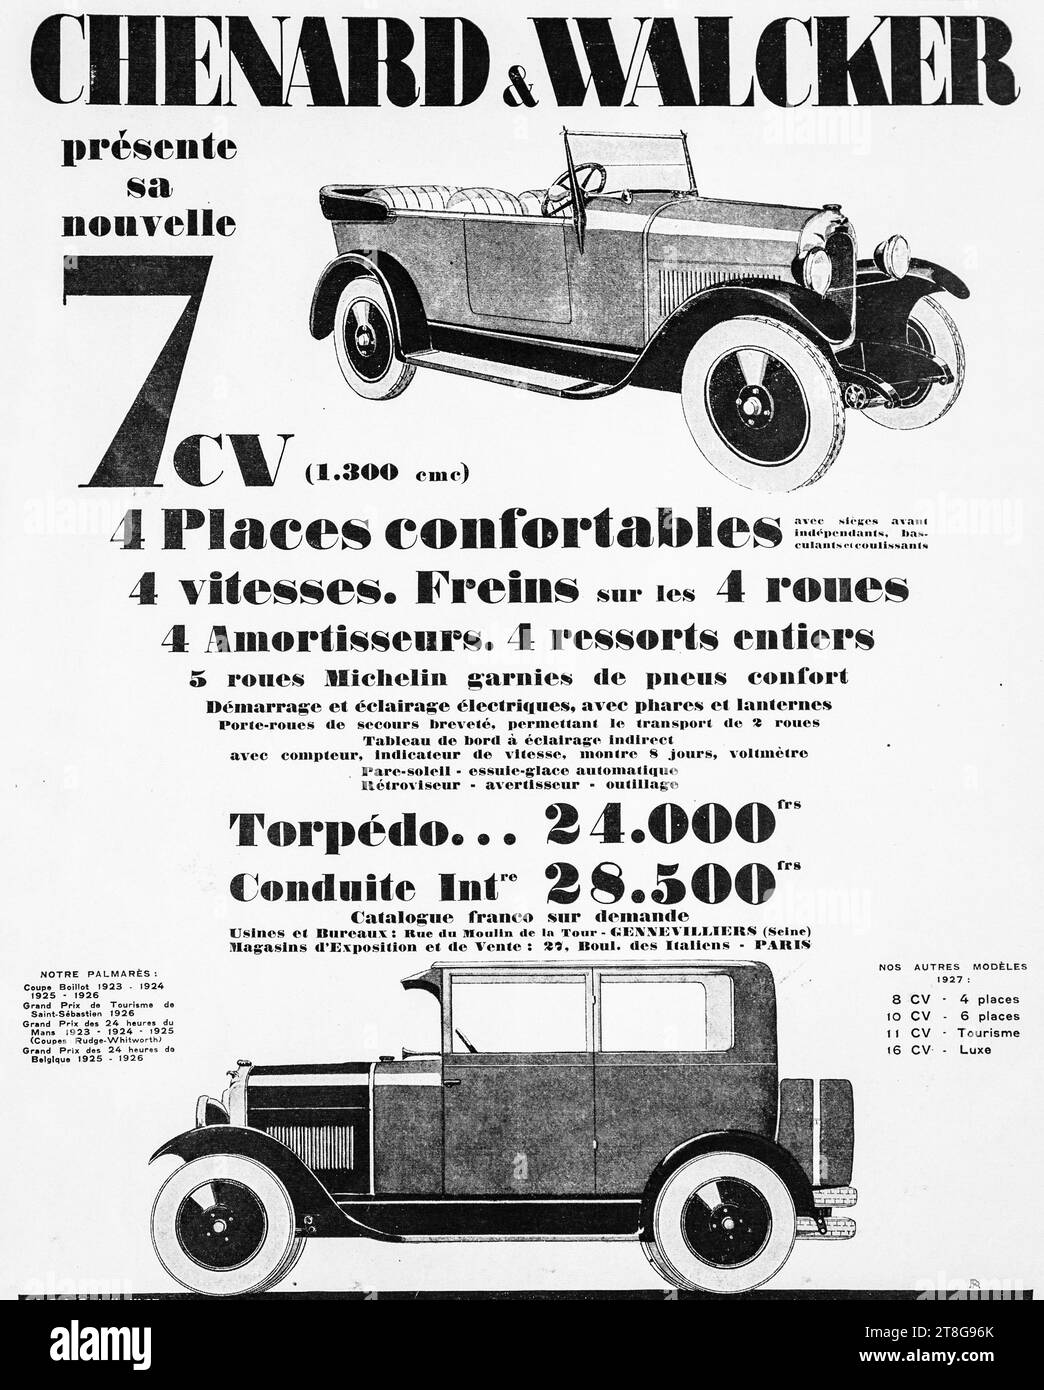 1920s classic car advertisement for Chenard & Walcker 7 CV car. Stock Photo